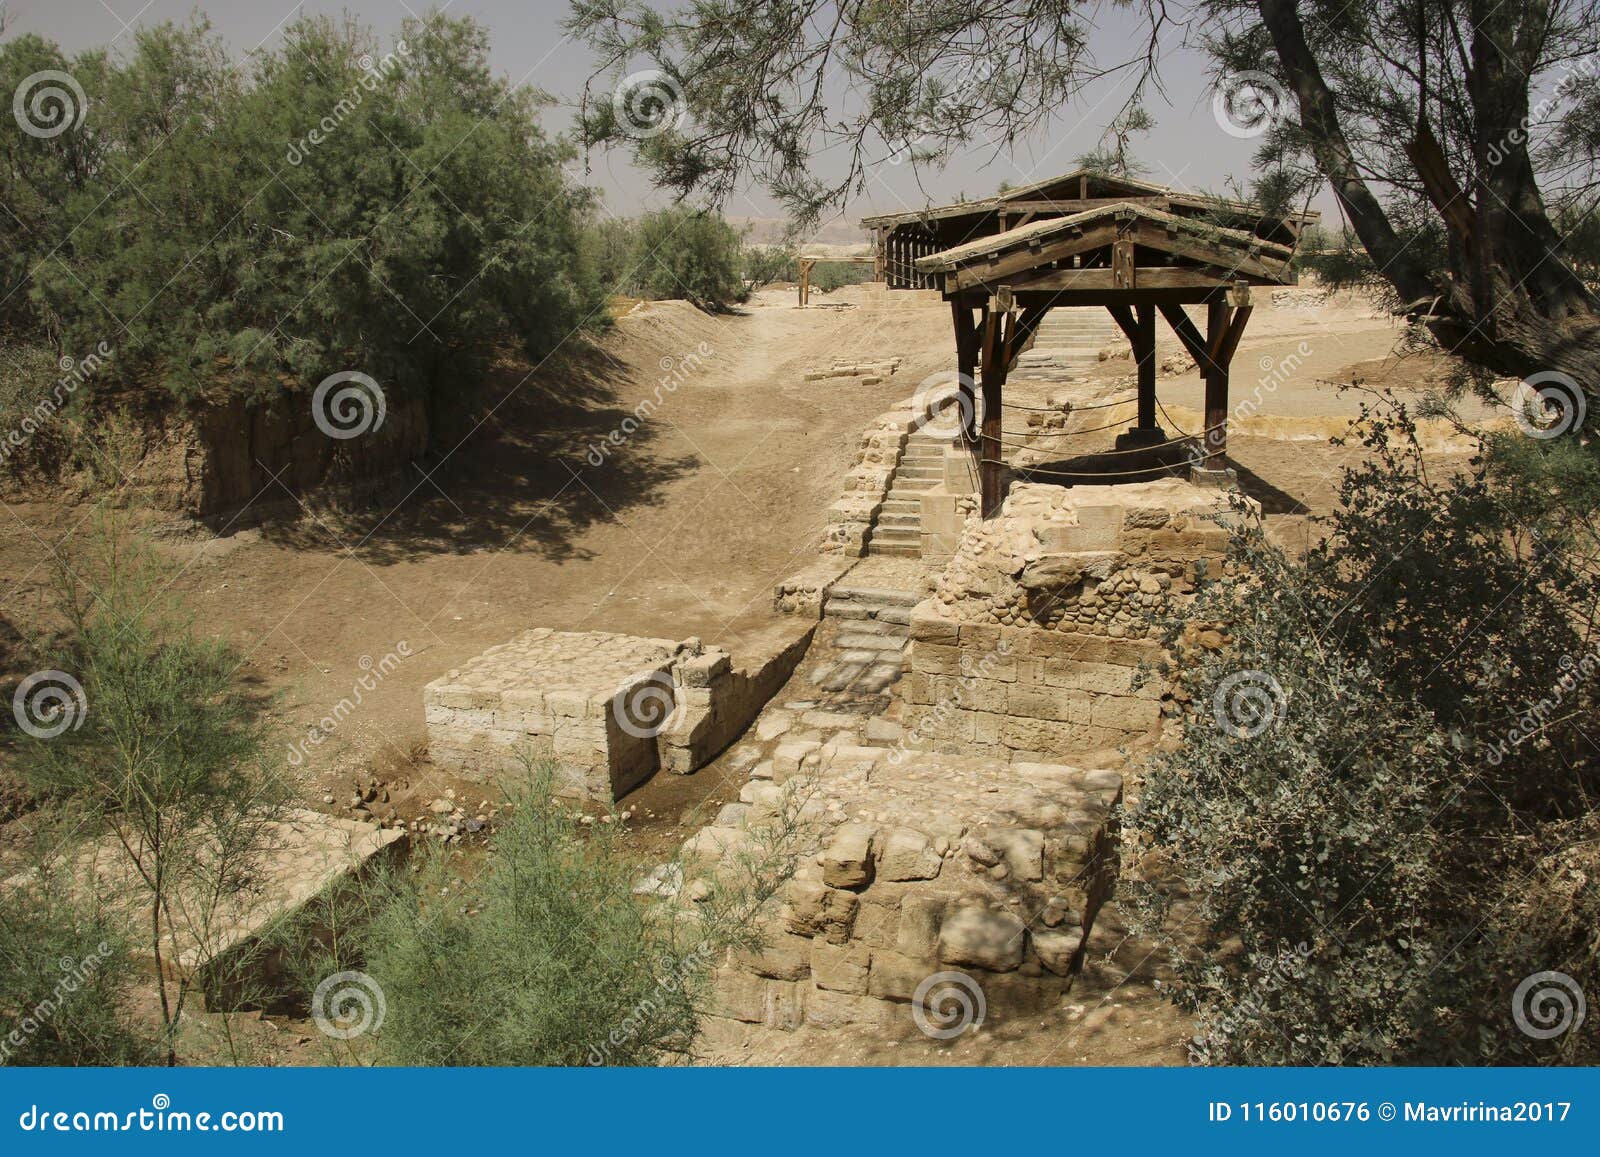 Sada diferencia Botánica Jordan River. Bethany Beyond the Jordan - Jesus Baptism Site Stock Photo -  Image of greenery, ancient: 116010676